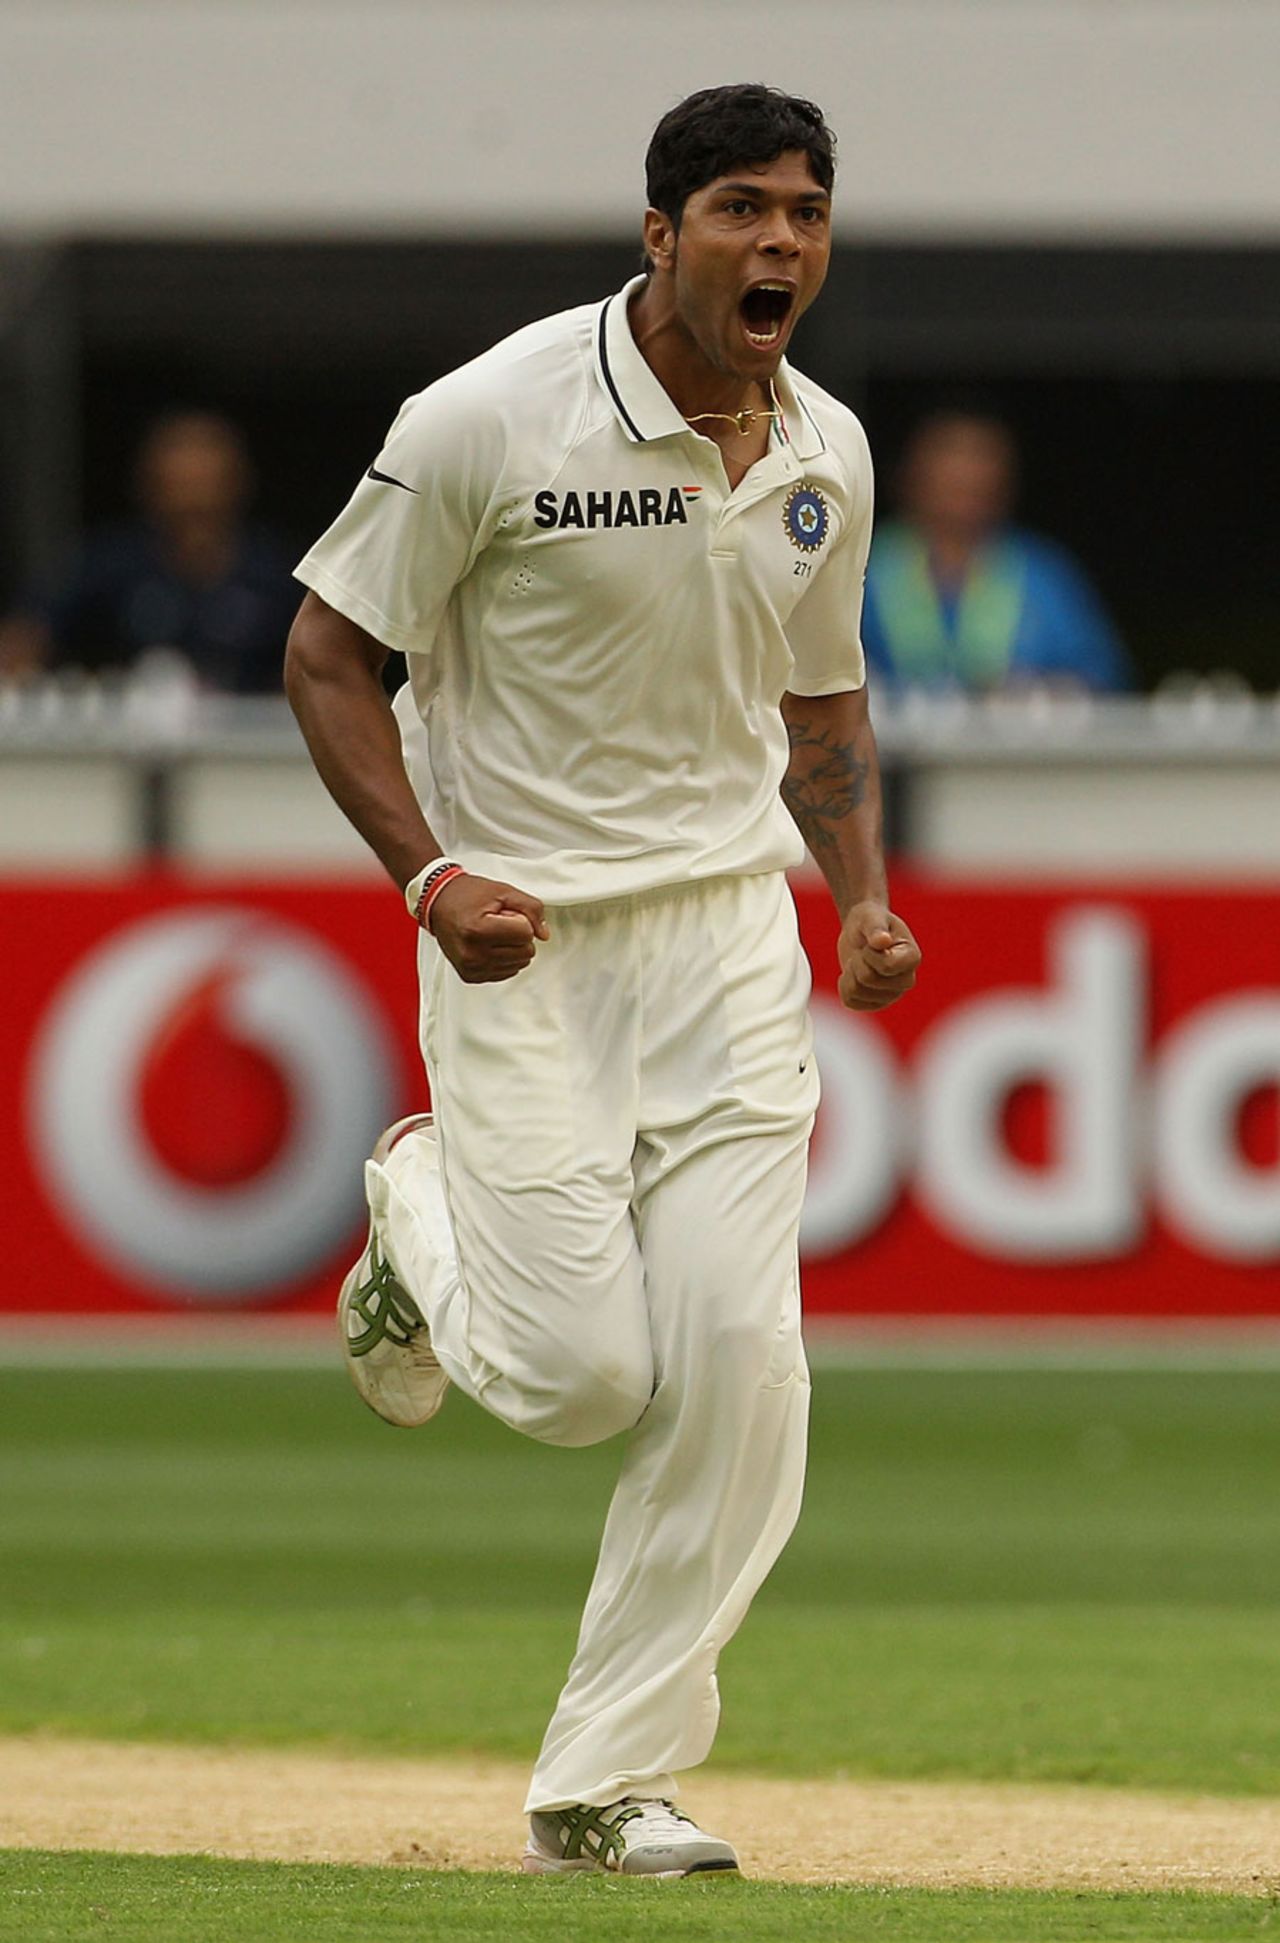 Umesh Yadav struck soon after a short rain break, Australia v India, 1st Test, Melbourne, 1st day, December 26, 2011